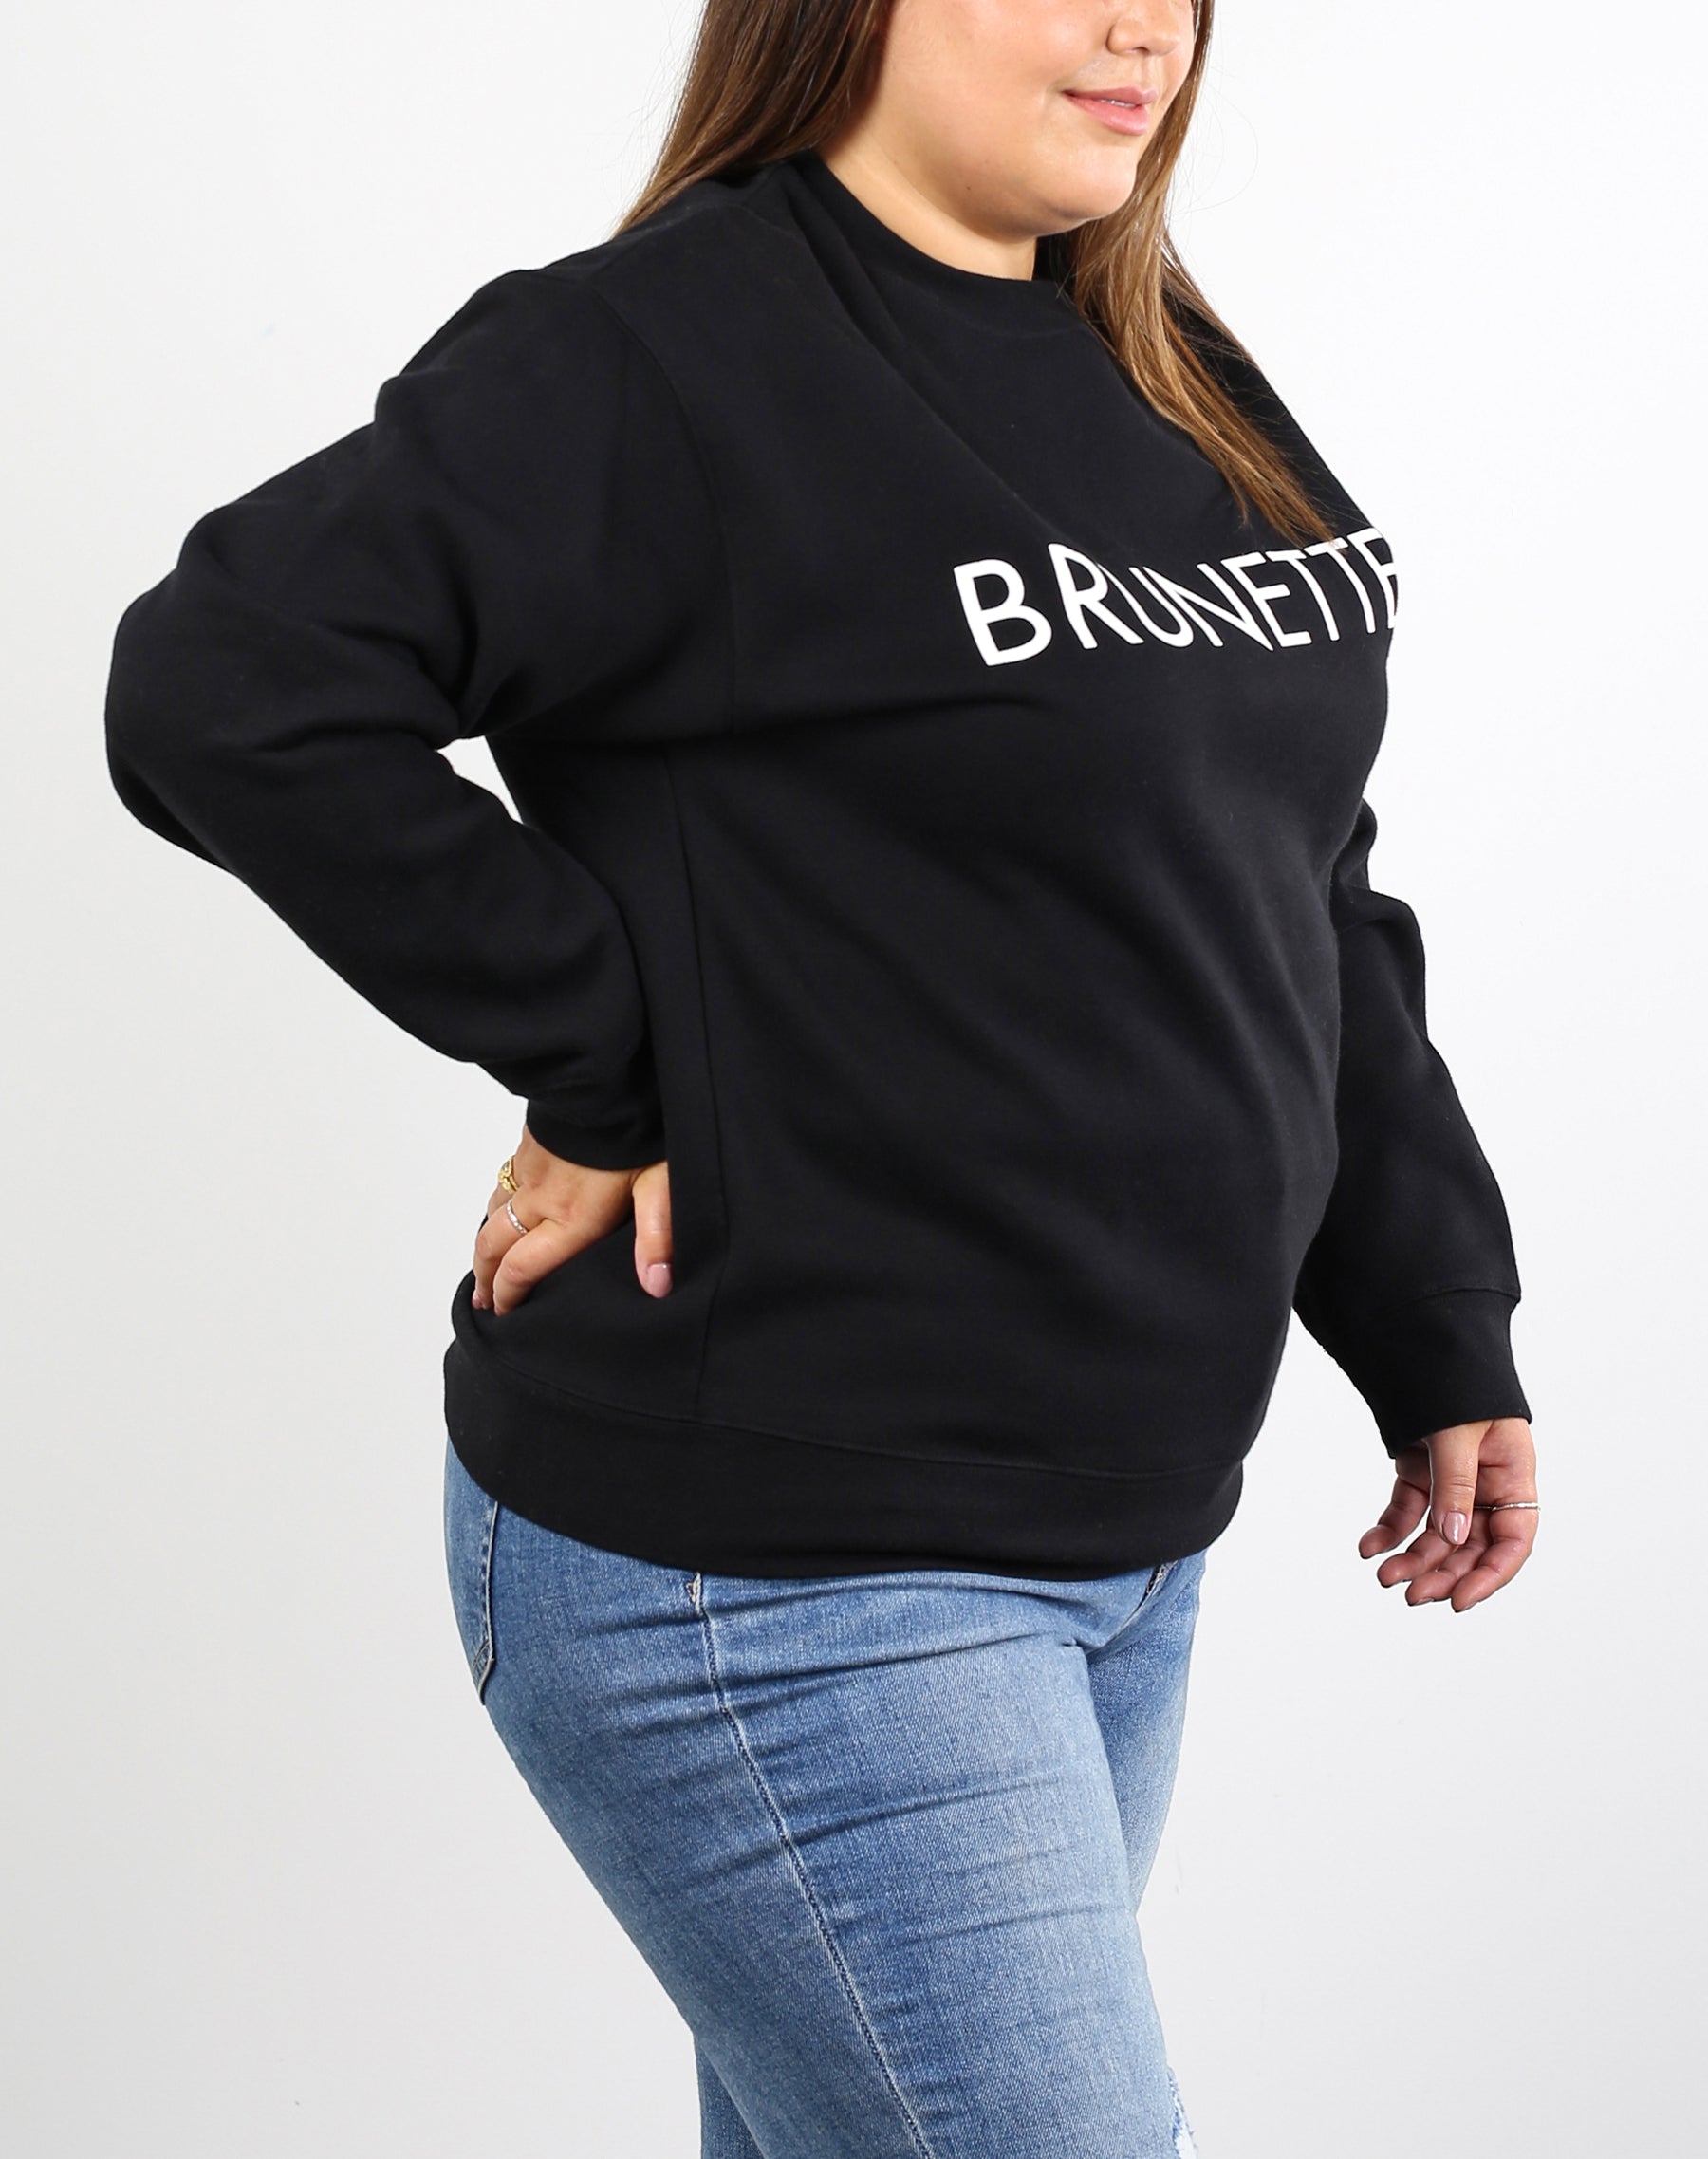 The "BRUNETTE" Classic Crew Neck Sweatshirt | Black